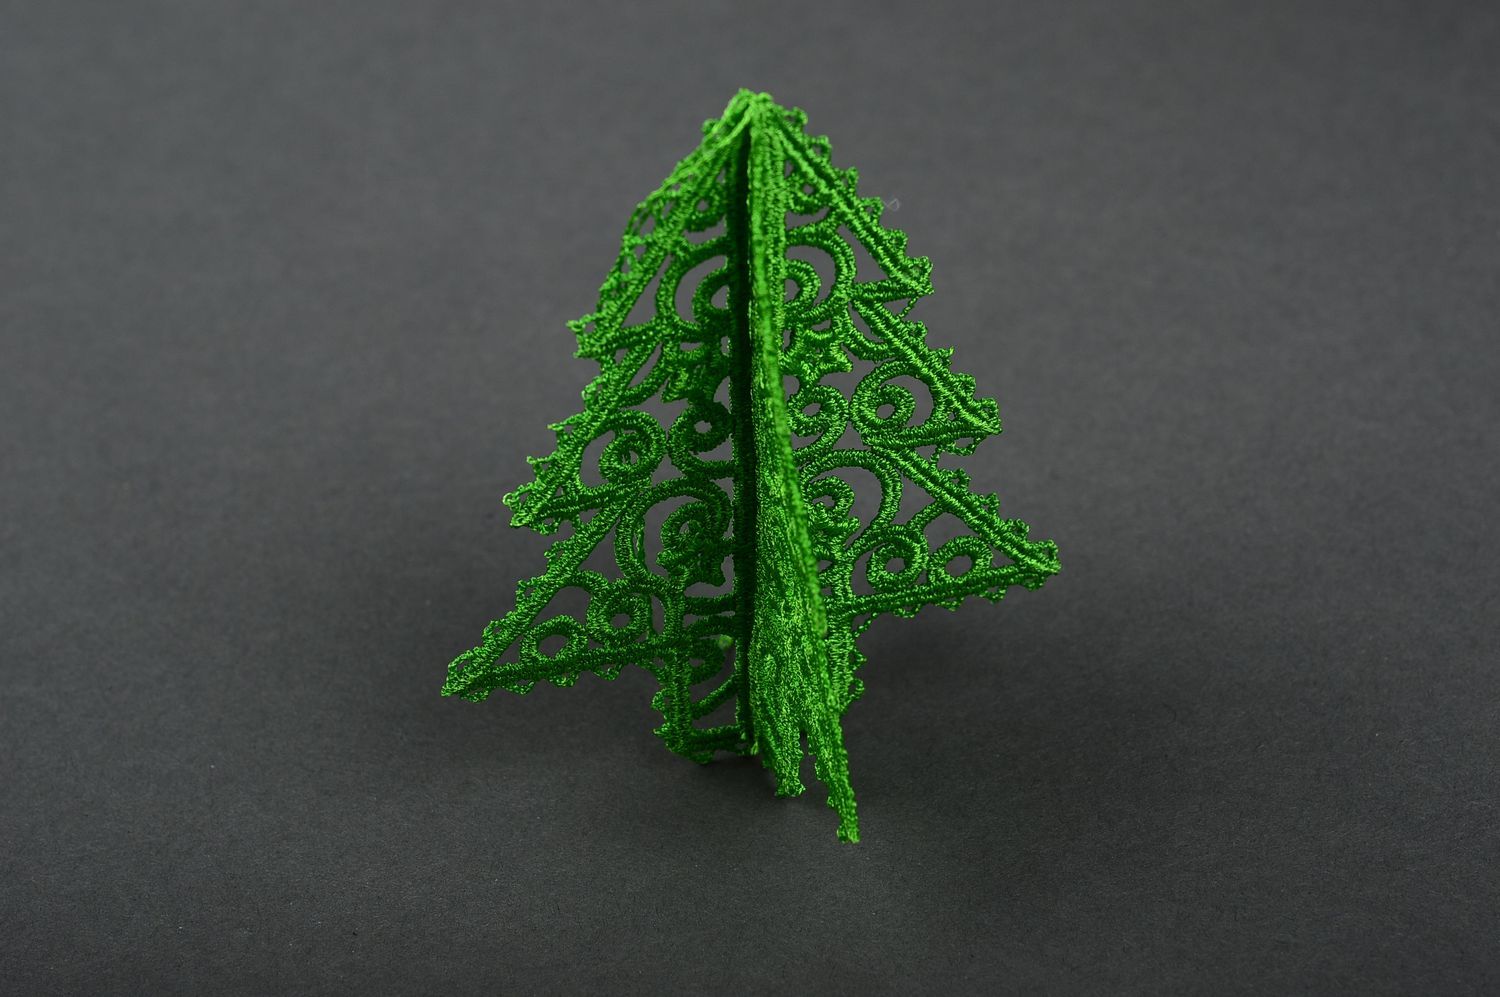 Handmade Christmas tree toy Christmas decor ideas decorative use only photo 3